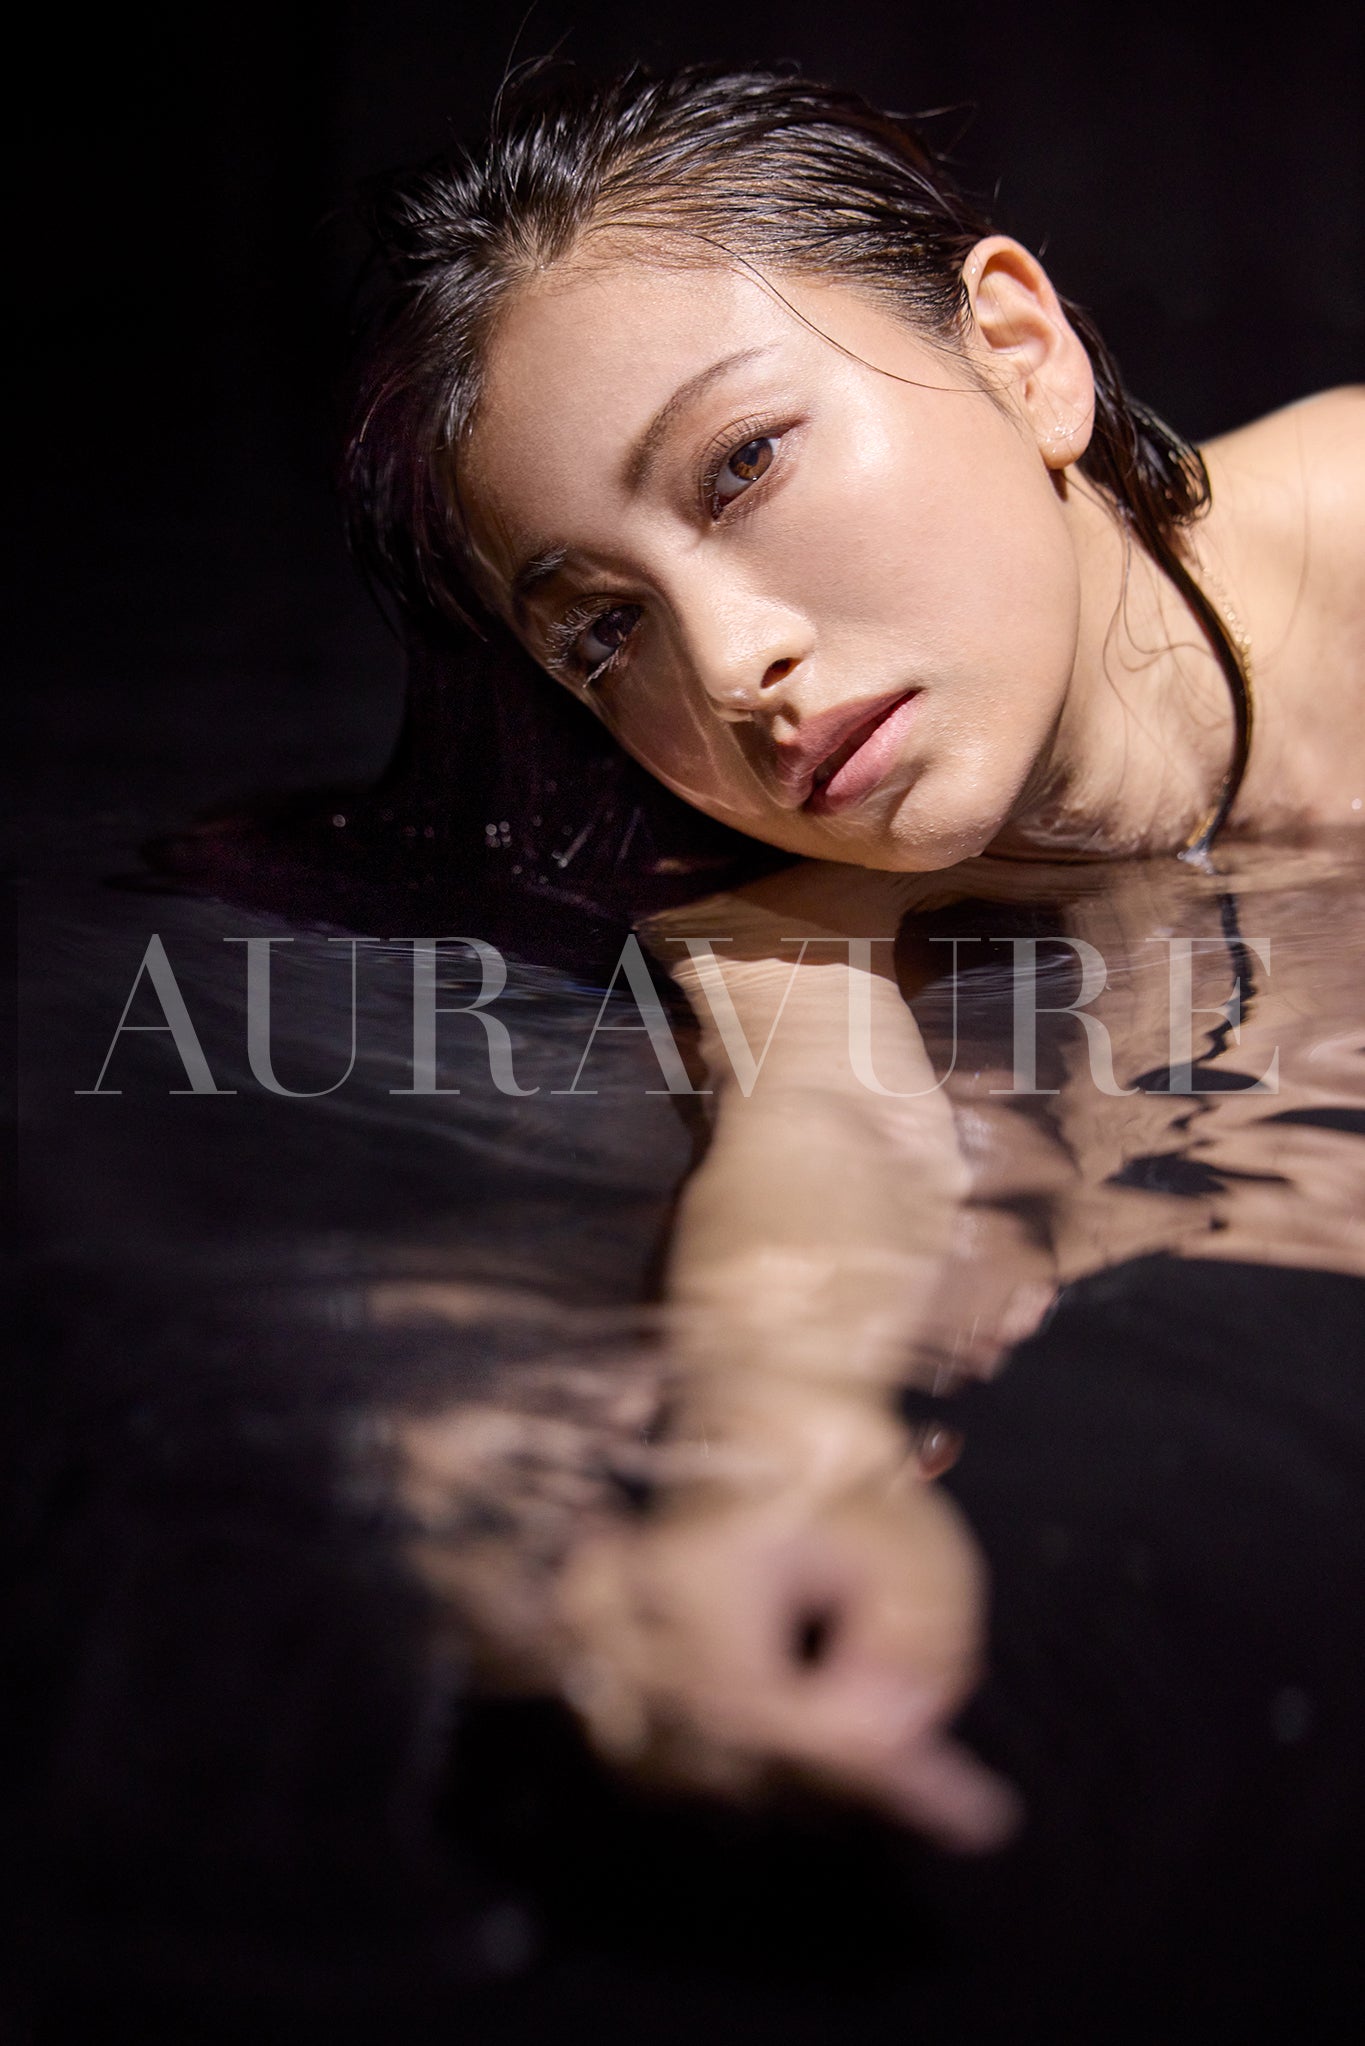 Auravure Magazine #2 鈴木聖 写真集+特典映像 完整版